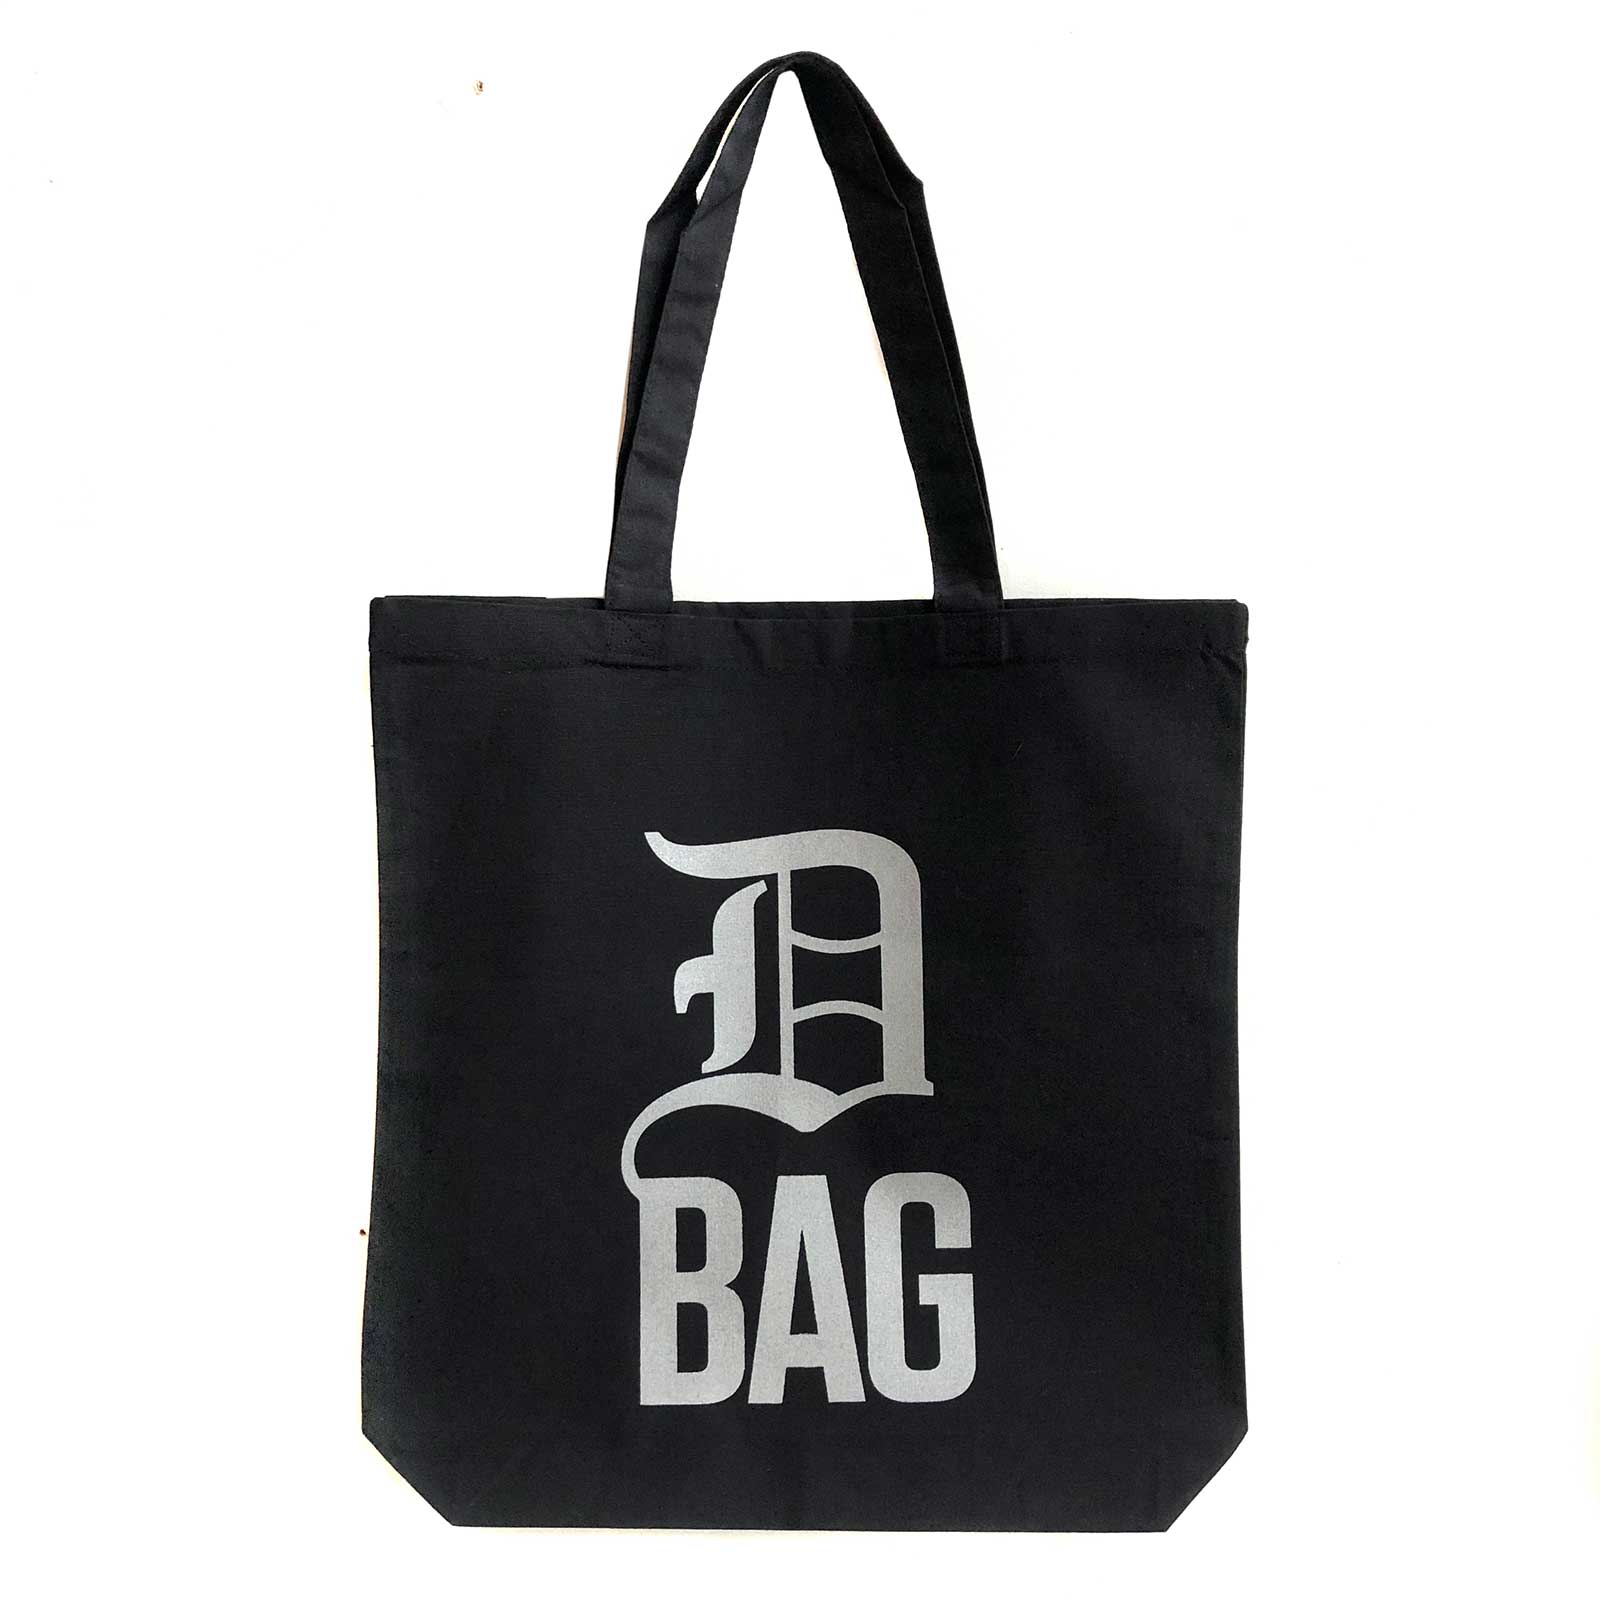 What FIBC Bulk Bags | Jumbo Bags to use A, B, C or D?